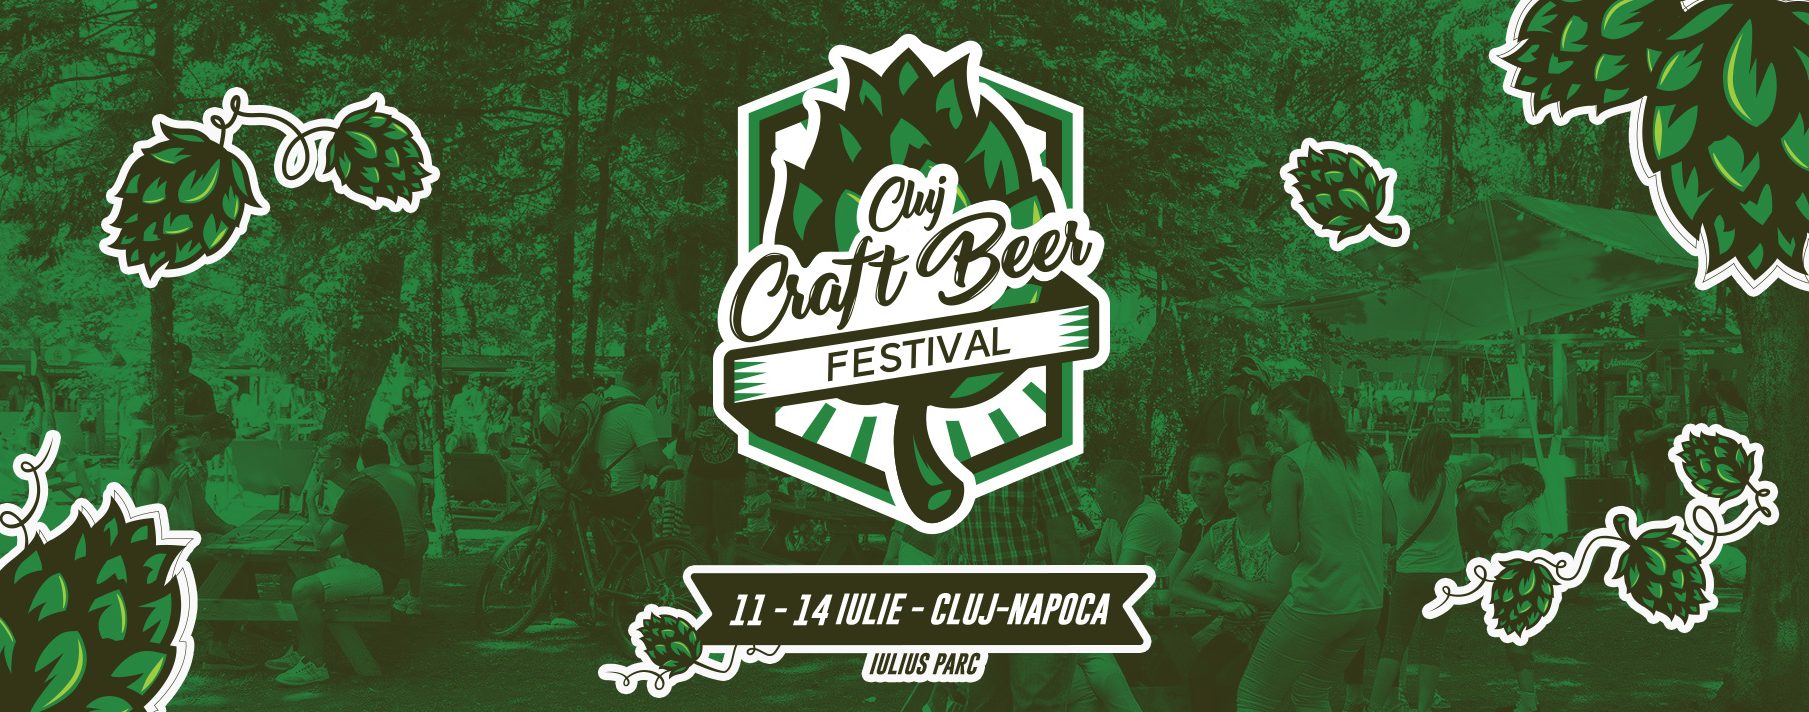 Cluj Craft Beer Festival